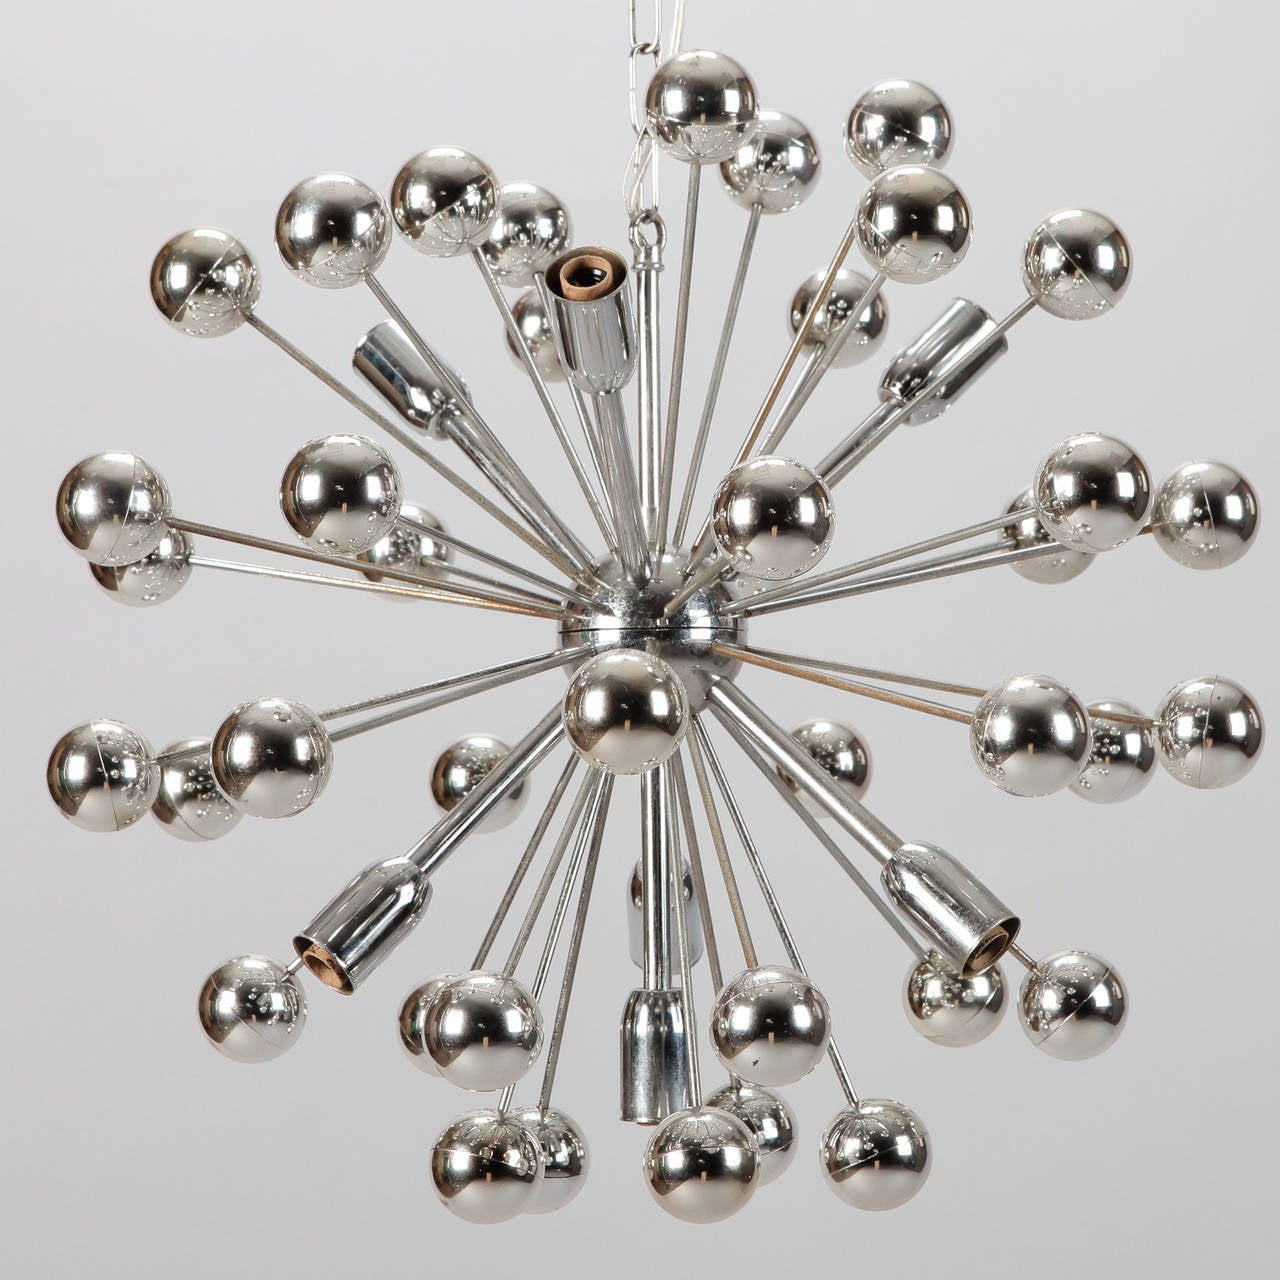 Circa 1960s chrome Sputnik style light fixture in atomic star burst shape with chrome ball ends and twelve light sockets.